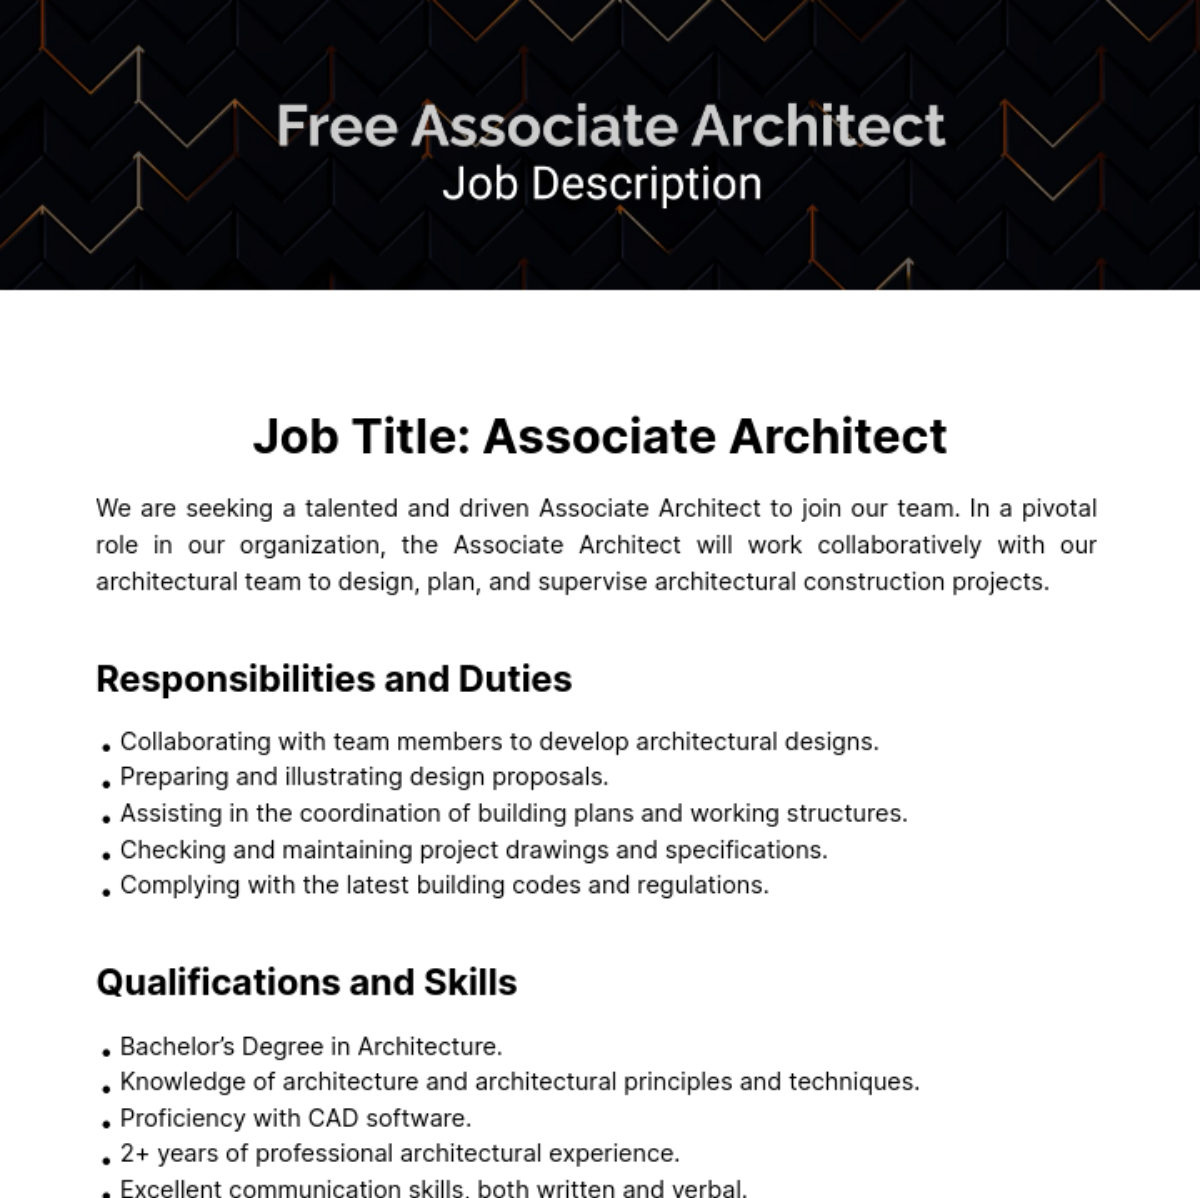 Free Associate Architect Job Description Template